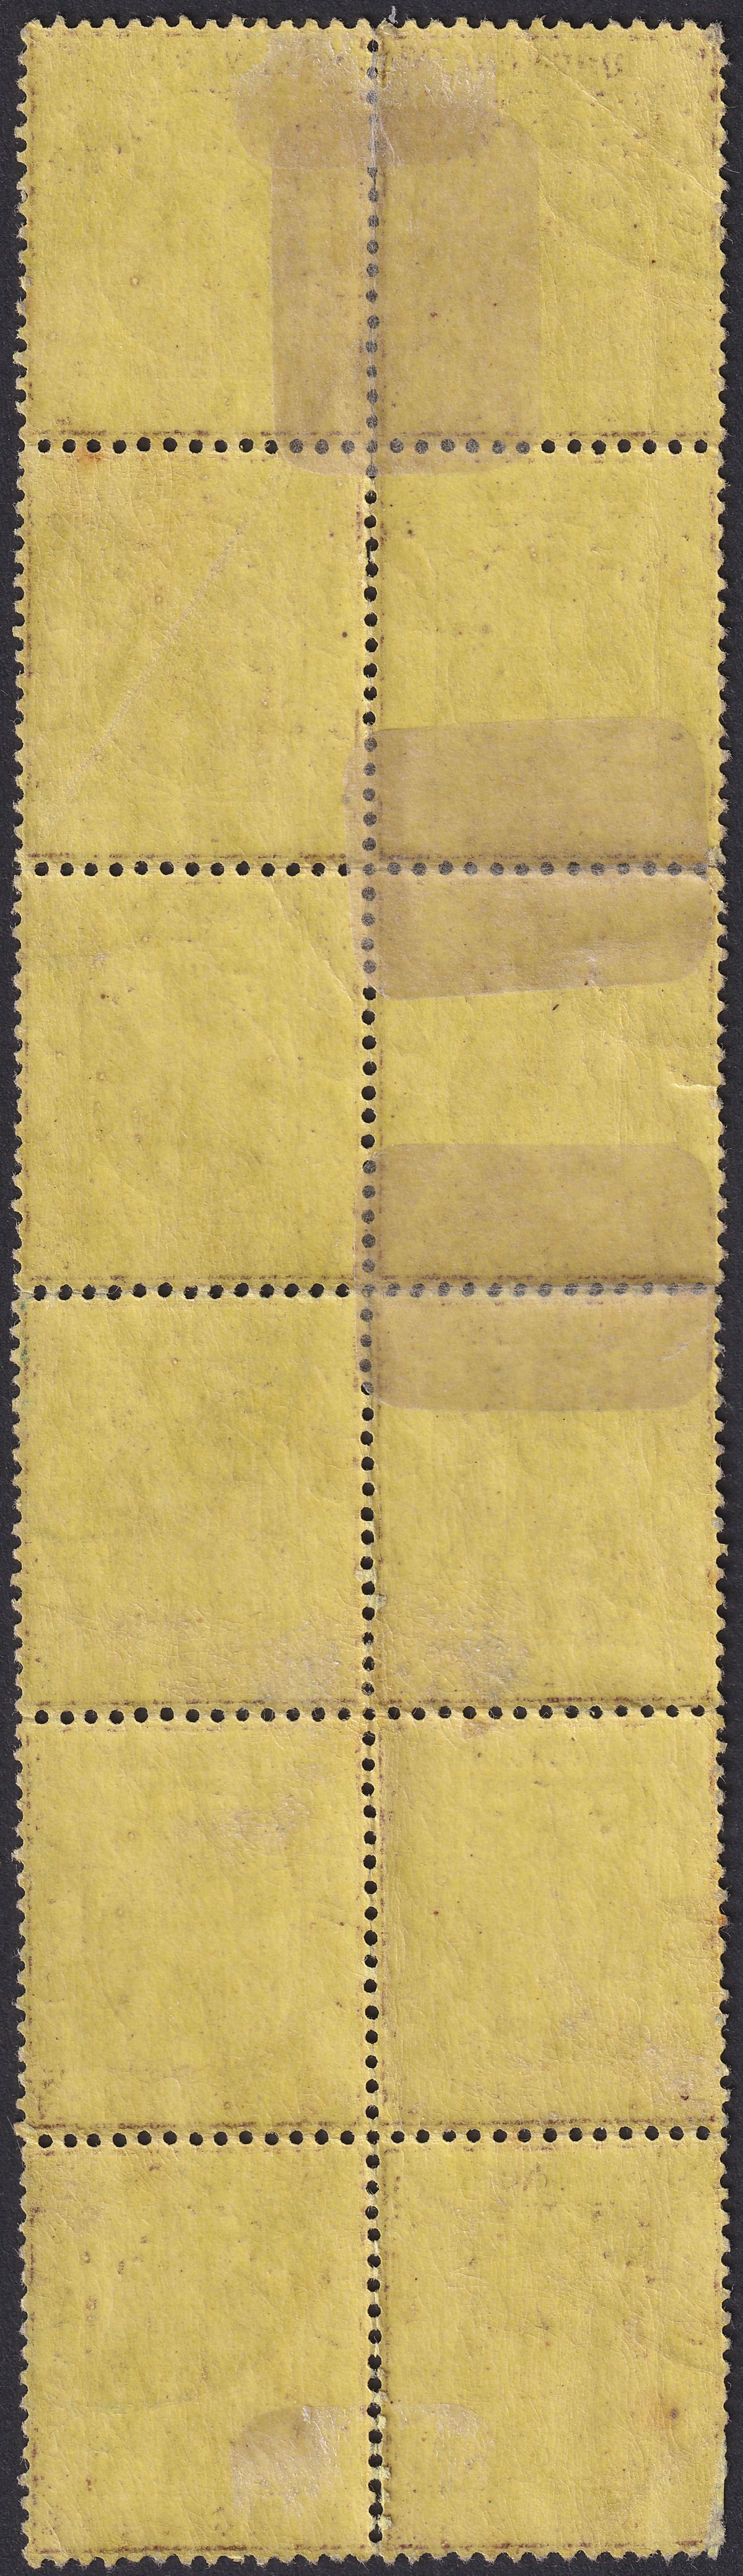 Hong Kong 1915 KGV 12c Block of 12 Used with CHEFOO Postmarks SG Z302 c£48 each